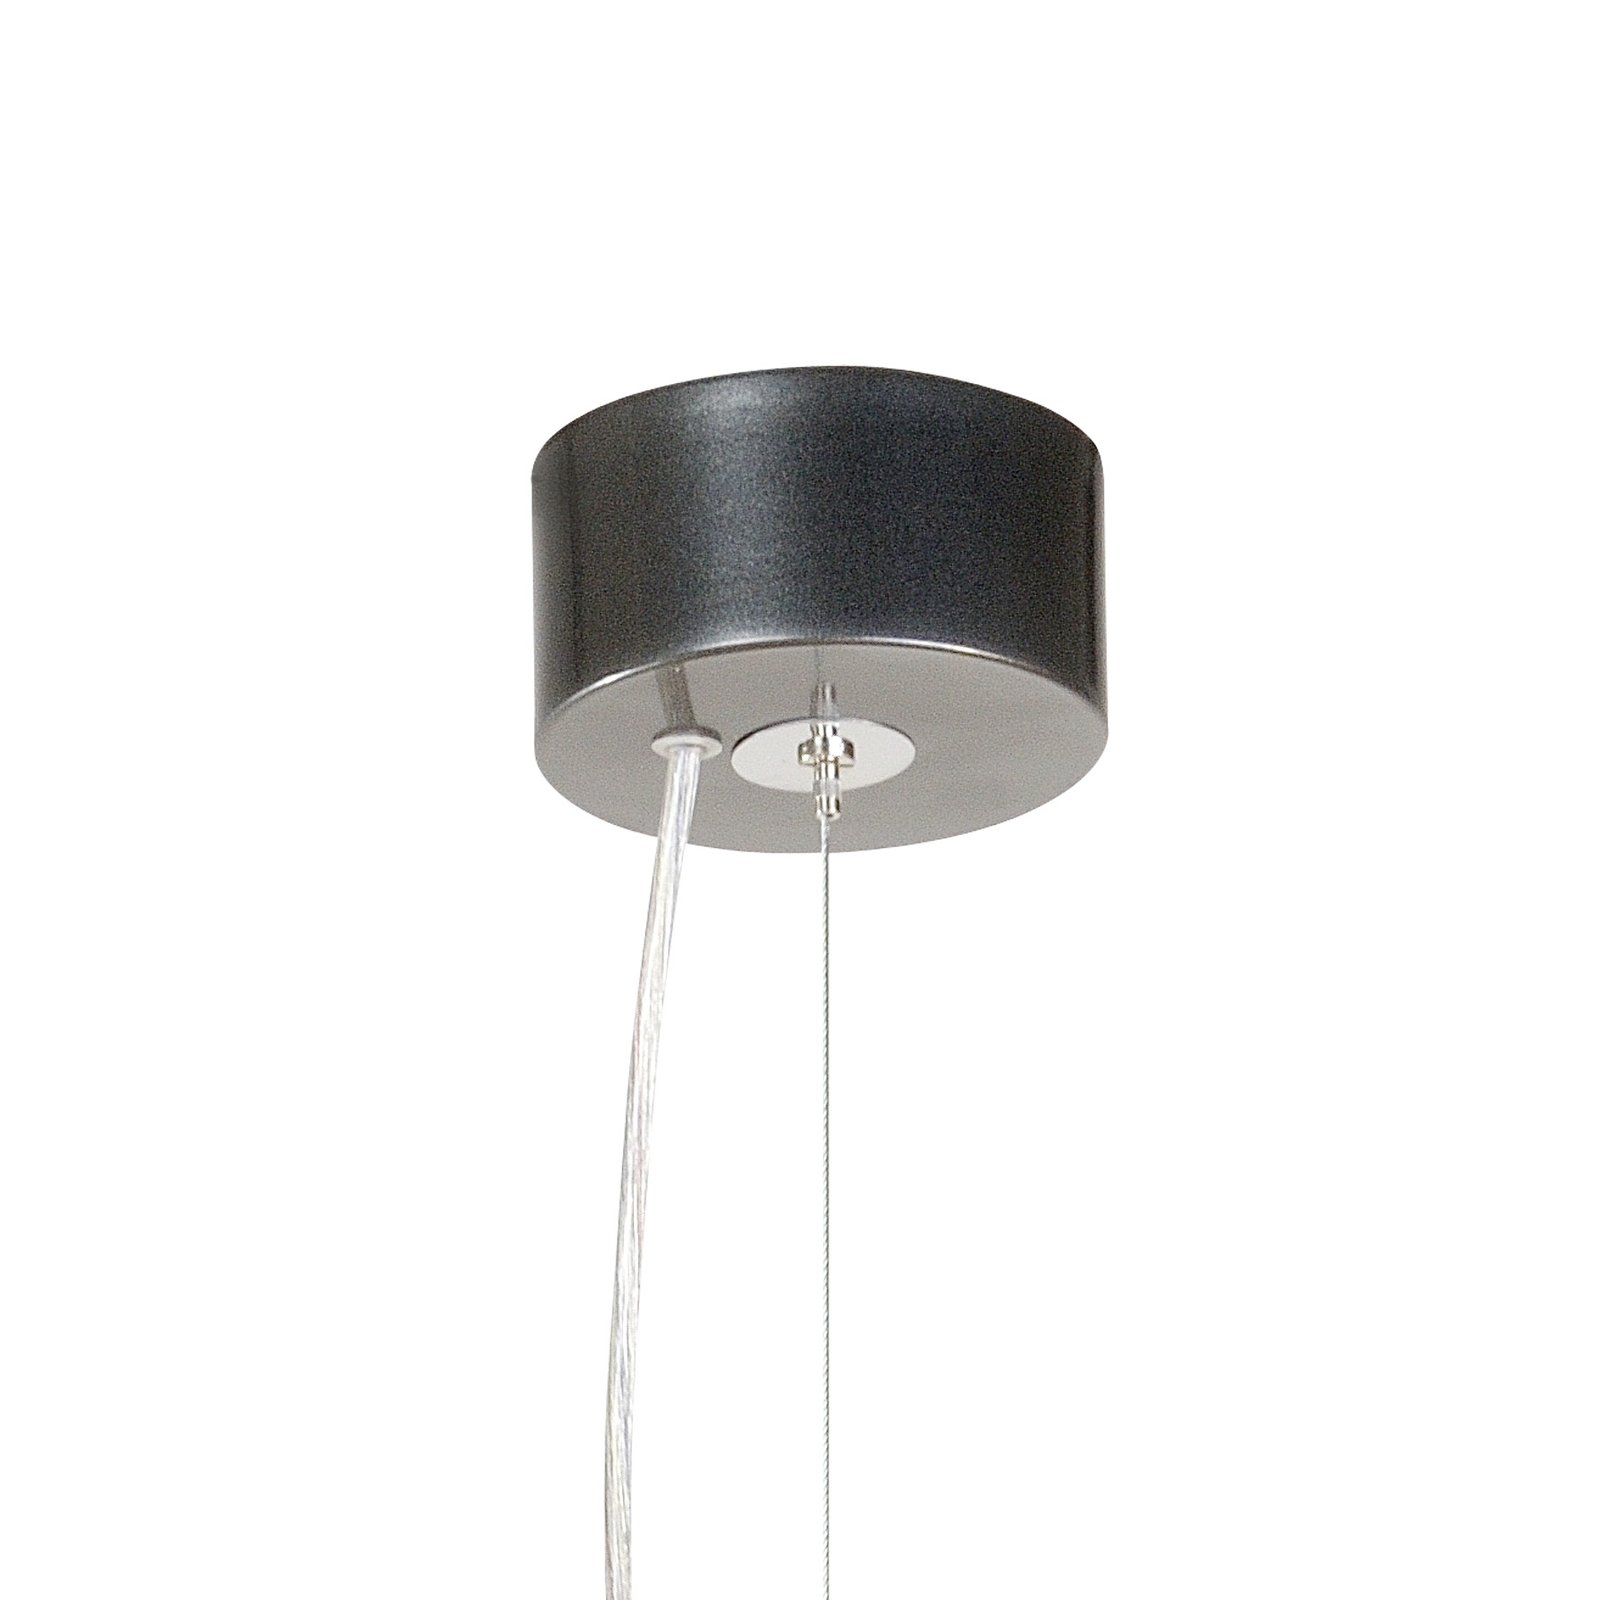 Vento hanglamp, antraciet, Ø 50 cm